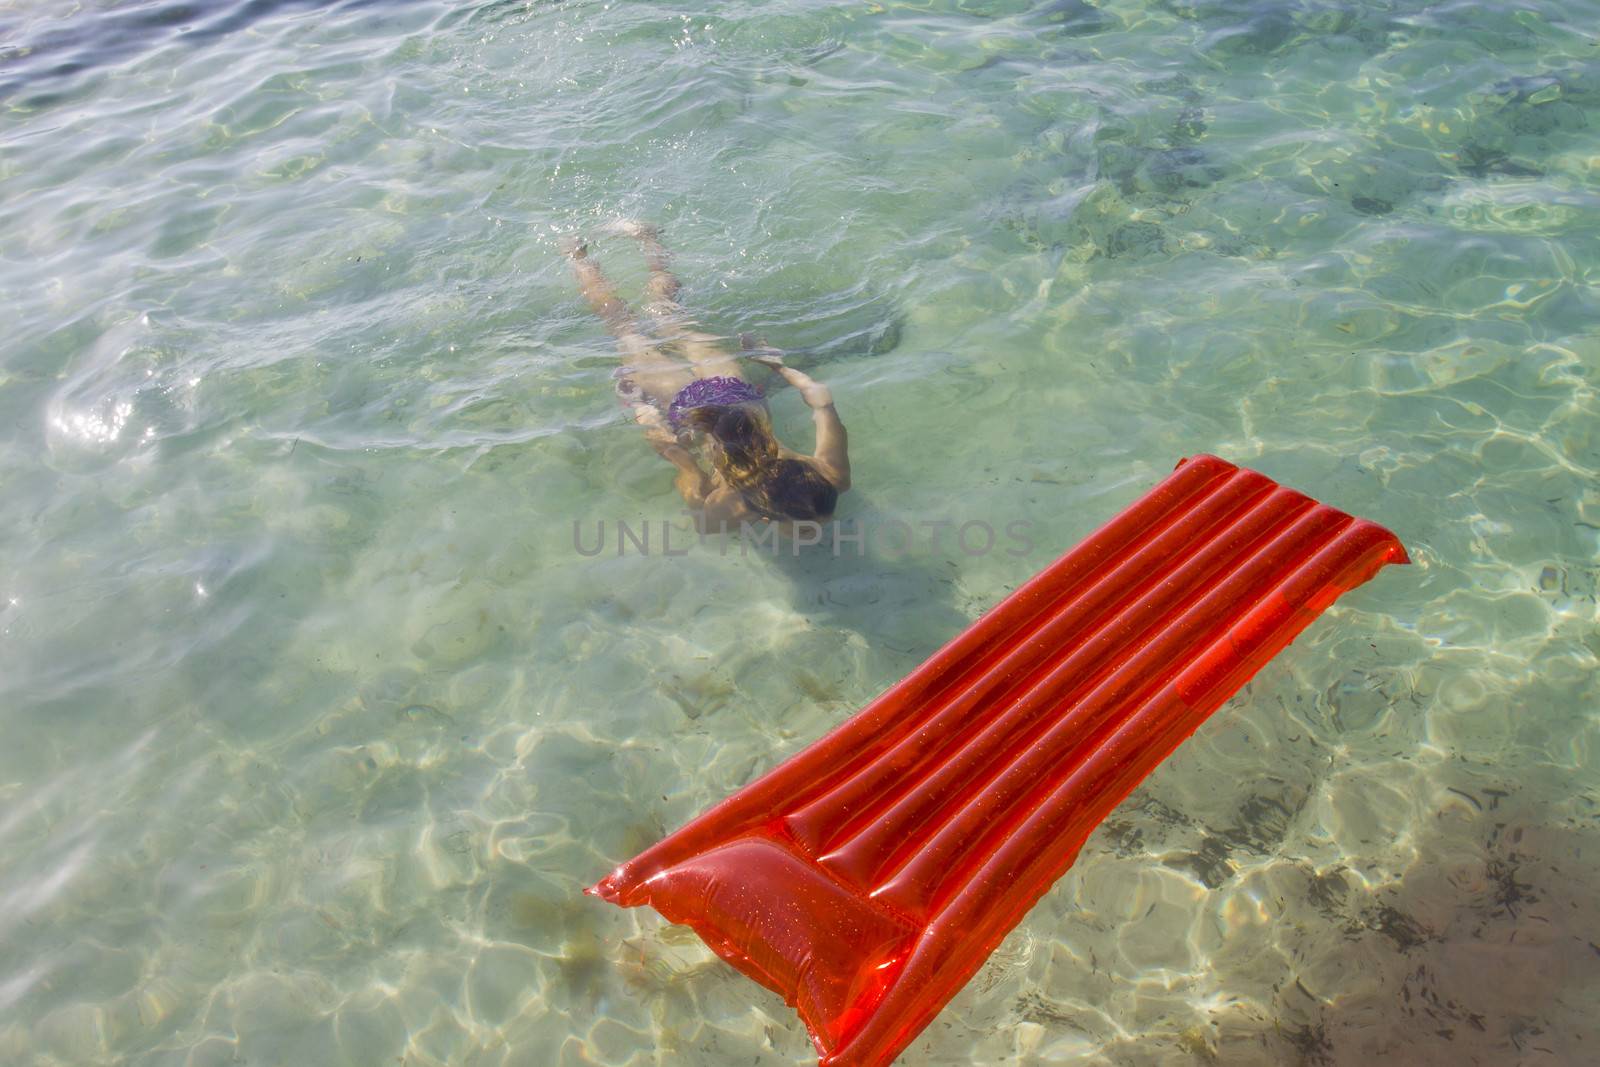 A teenager free diving towards an inflatable air mattress